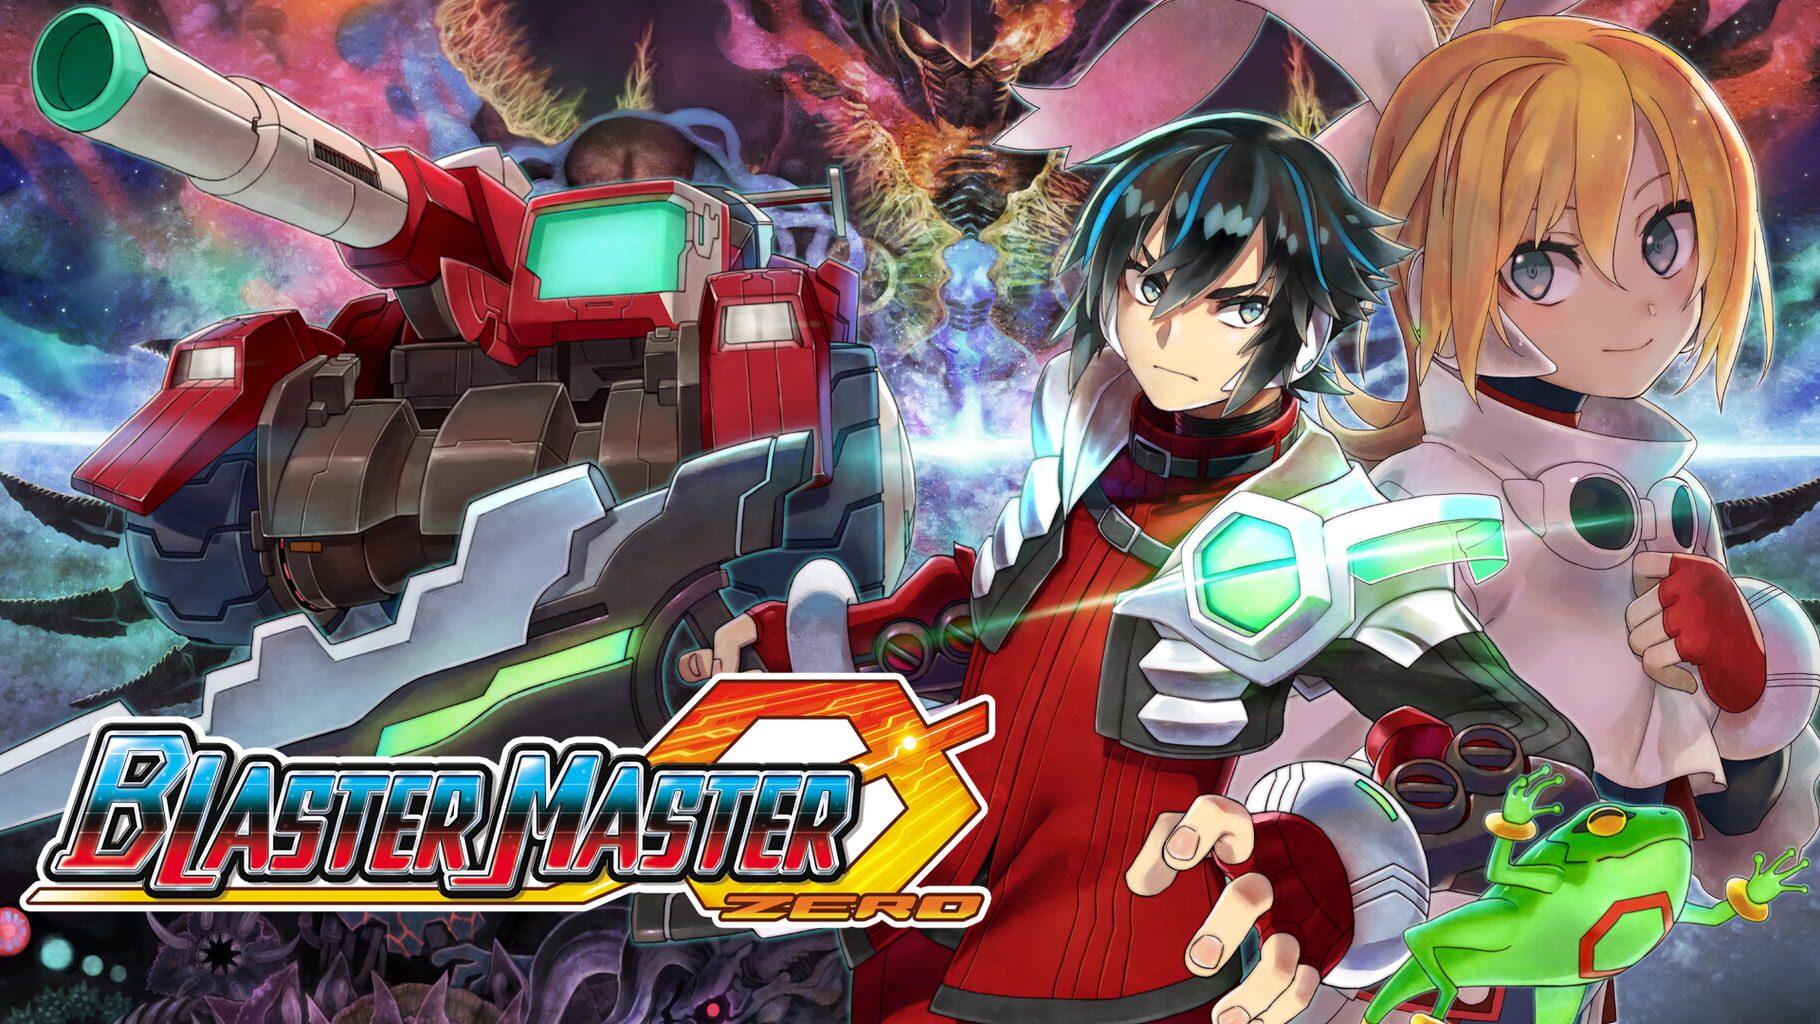 Blaster Master Zero artwork